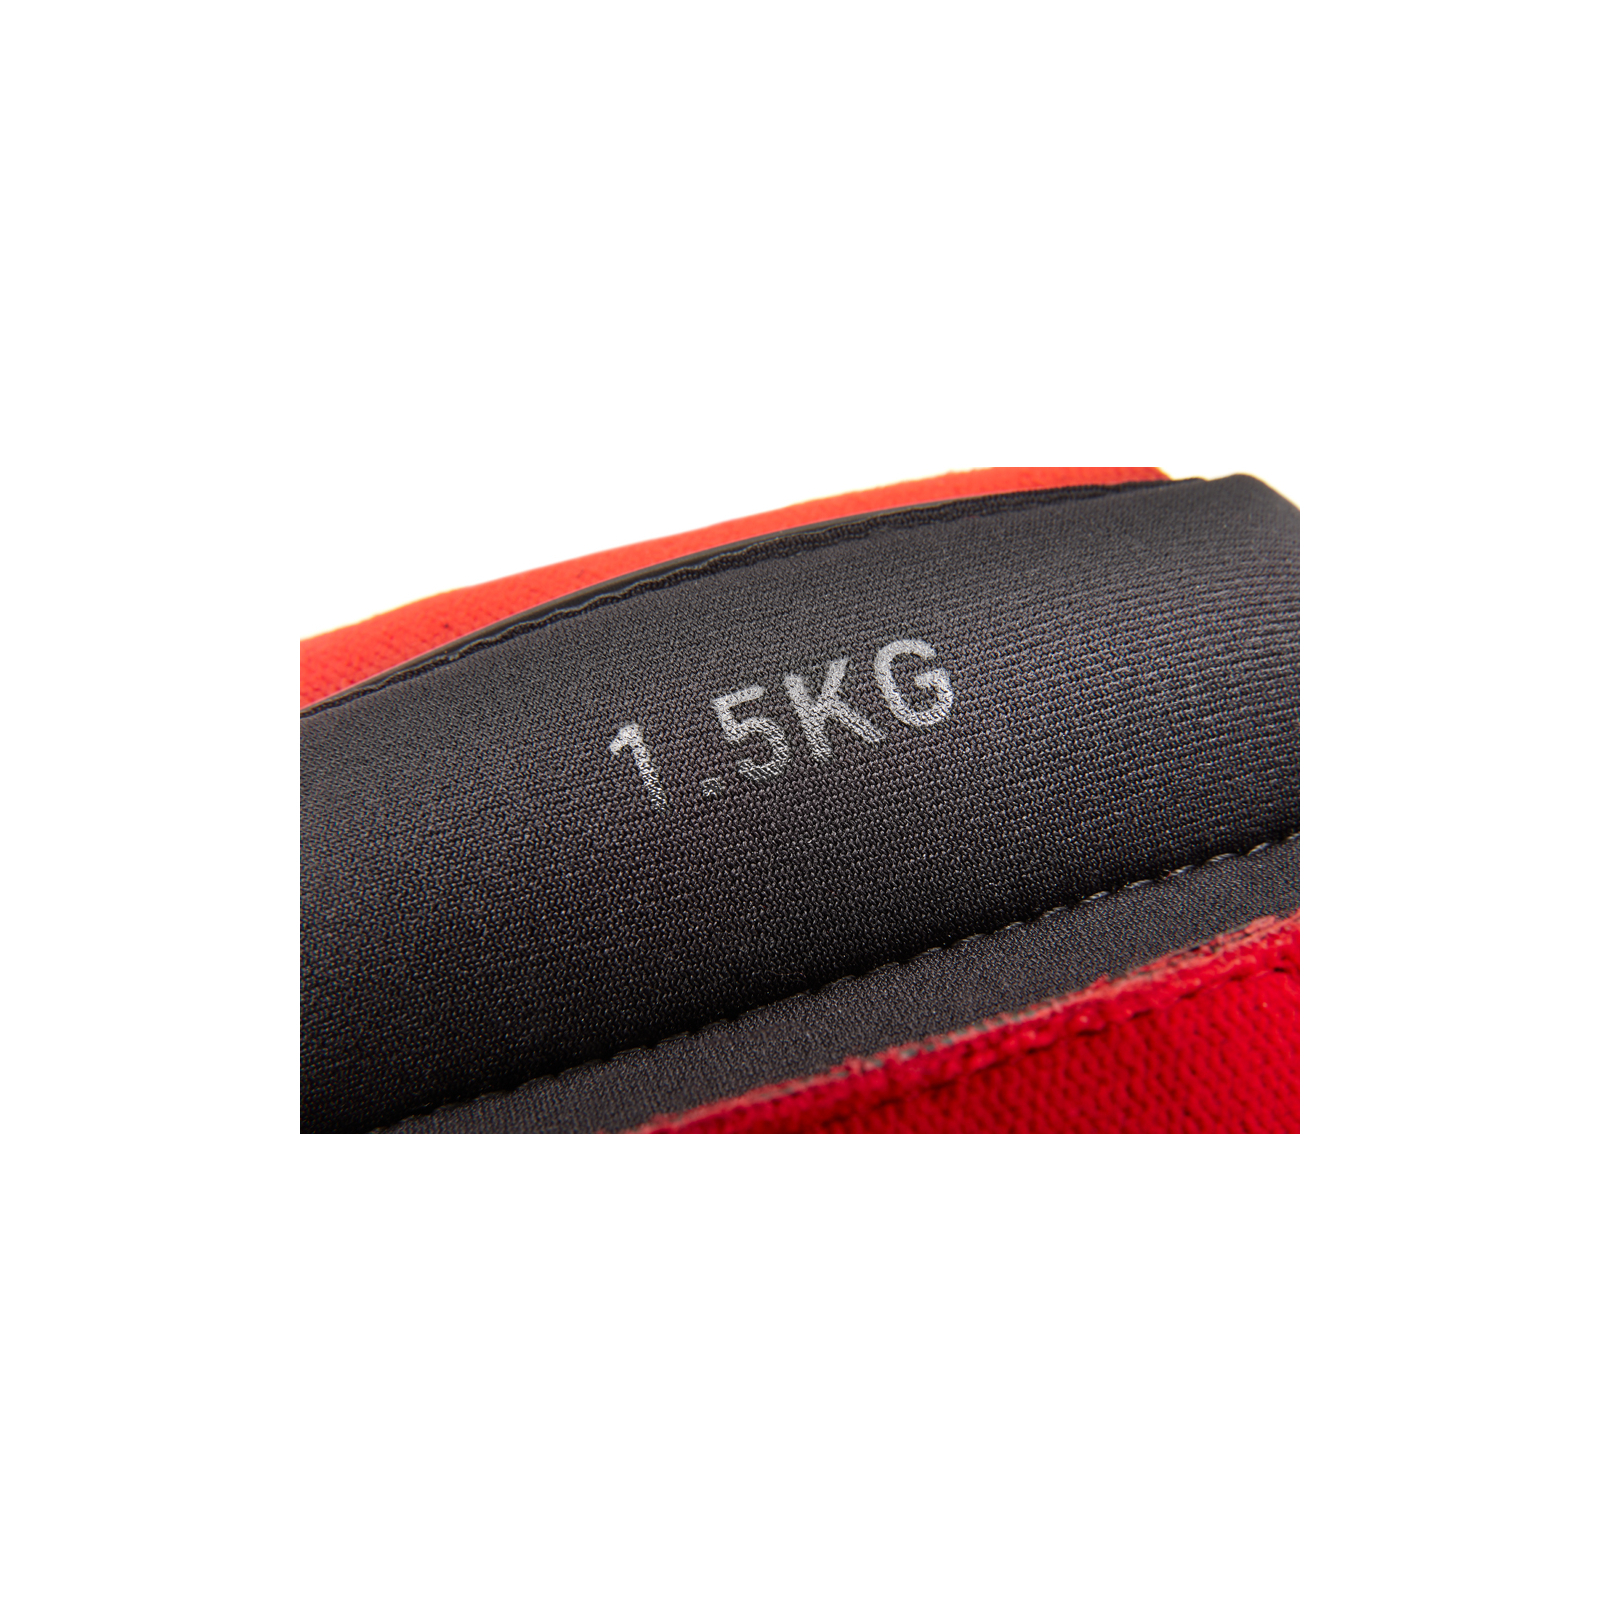 Утяжелитель Reebok Flexlock Ankle Weights чорний, червоний RAWT-11272 1.5 кг (885652017275) изображение 6